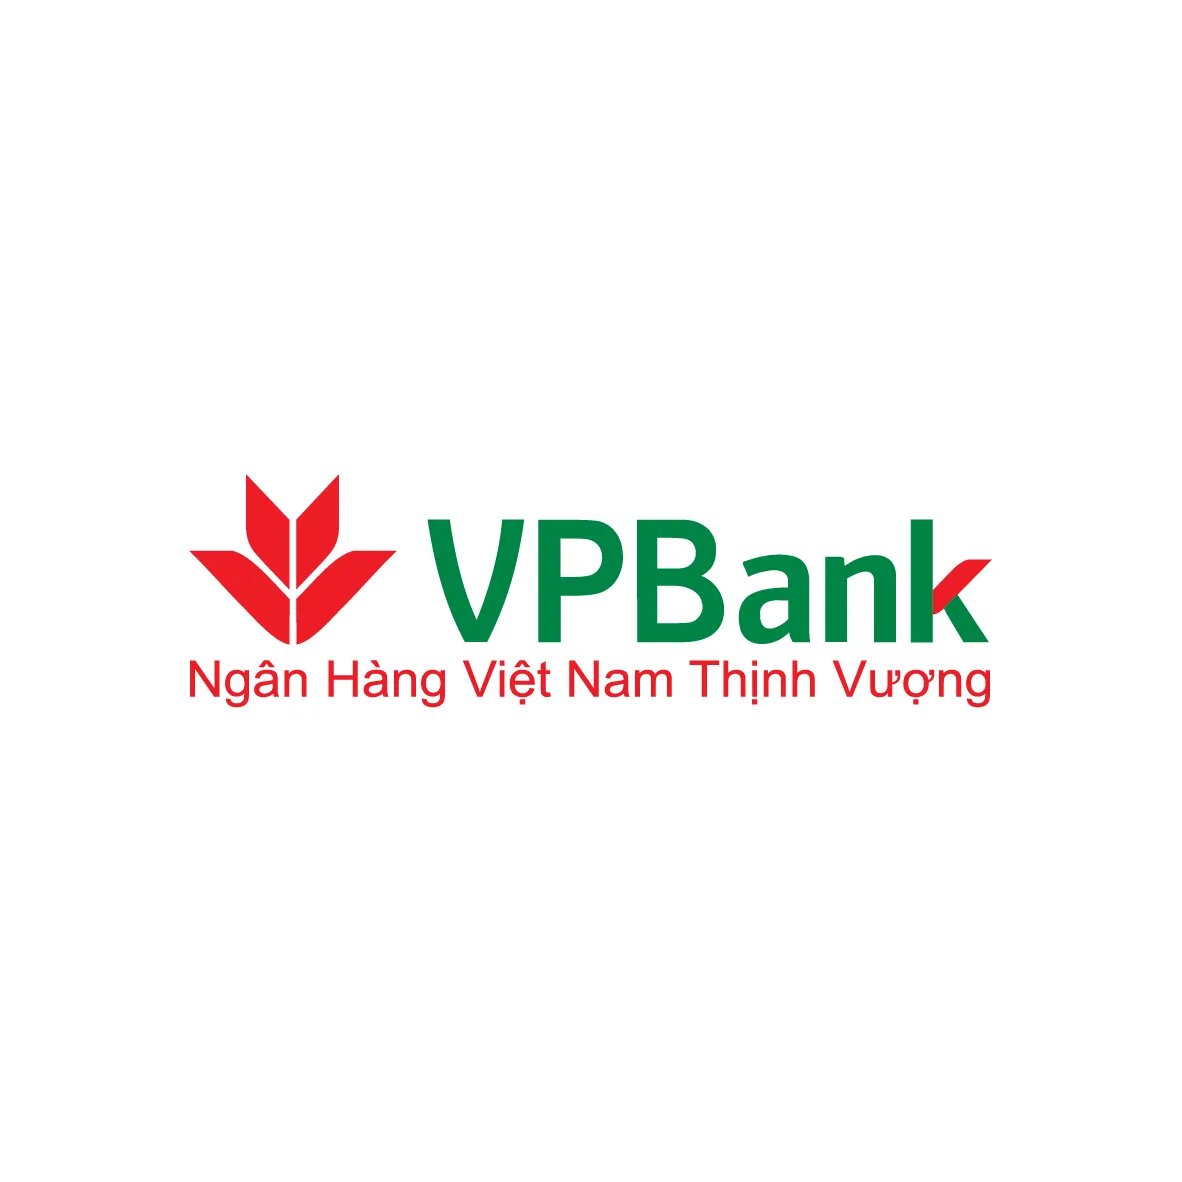 Vpbank logo